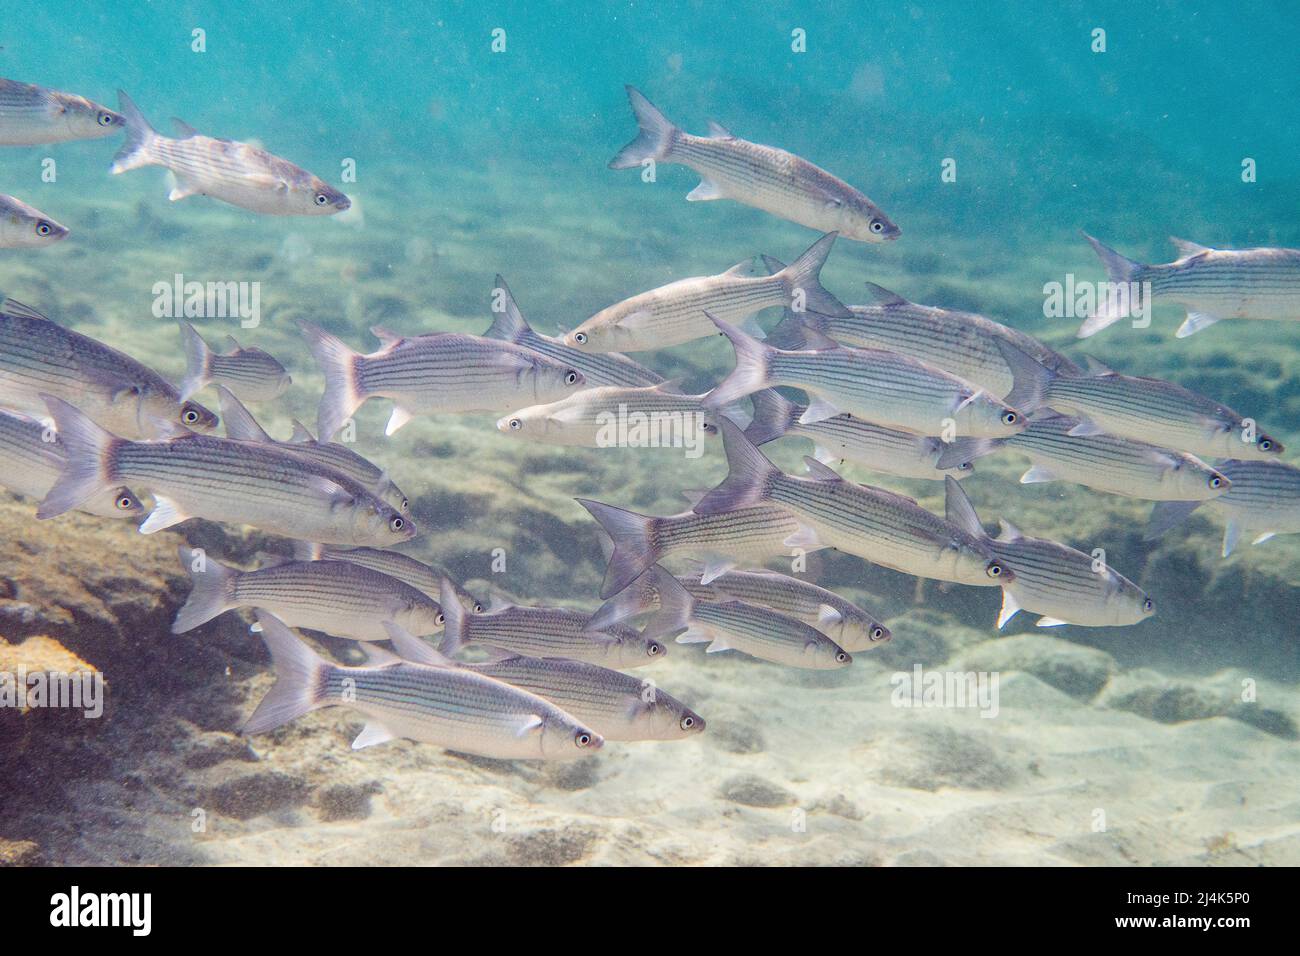 School of thicklip grey mullet, Chelon labrosus, a coastal fish of the family Mugilidae, underwater in Atlantic Ocean. Stock Photo